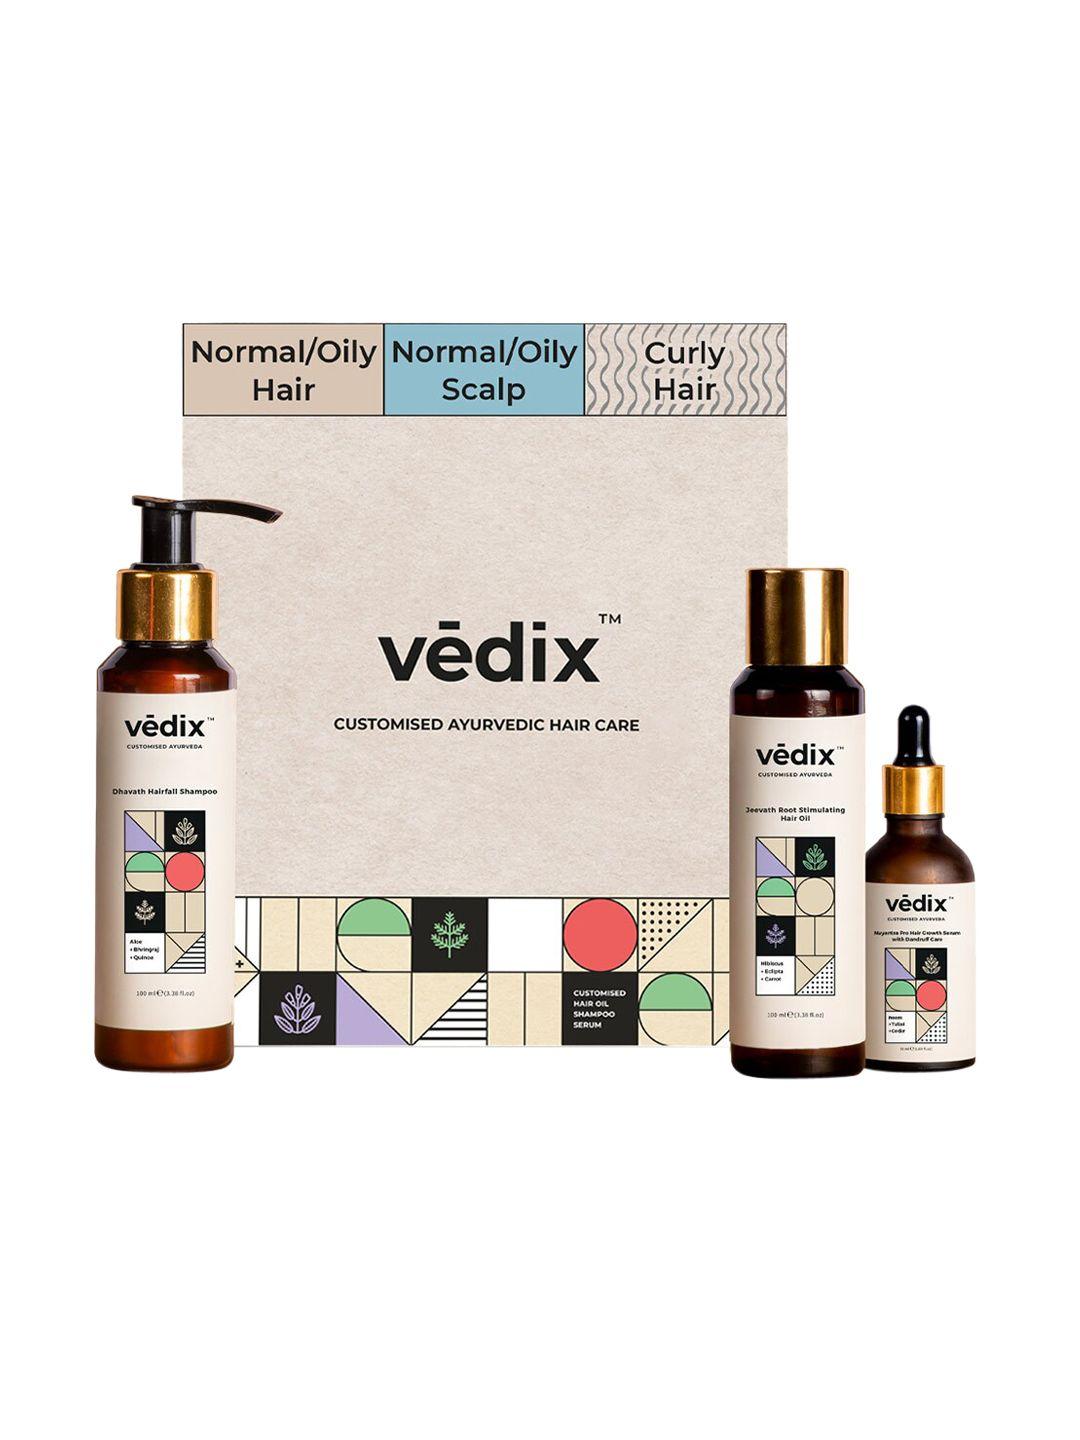 vedix customized hair fall control  regimen for normal/oily hair-oily scalp+curly hair